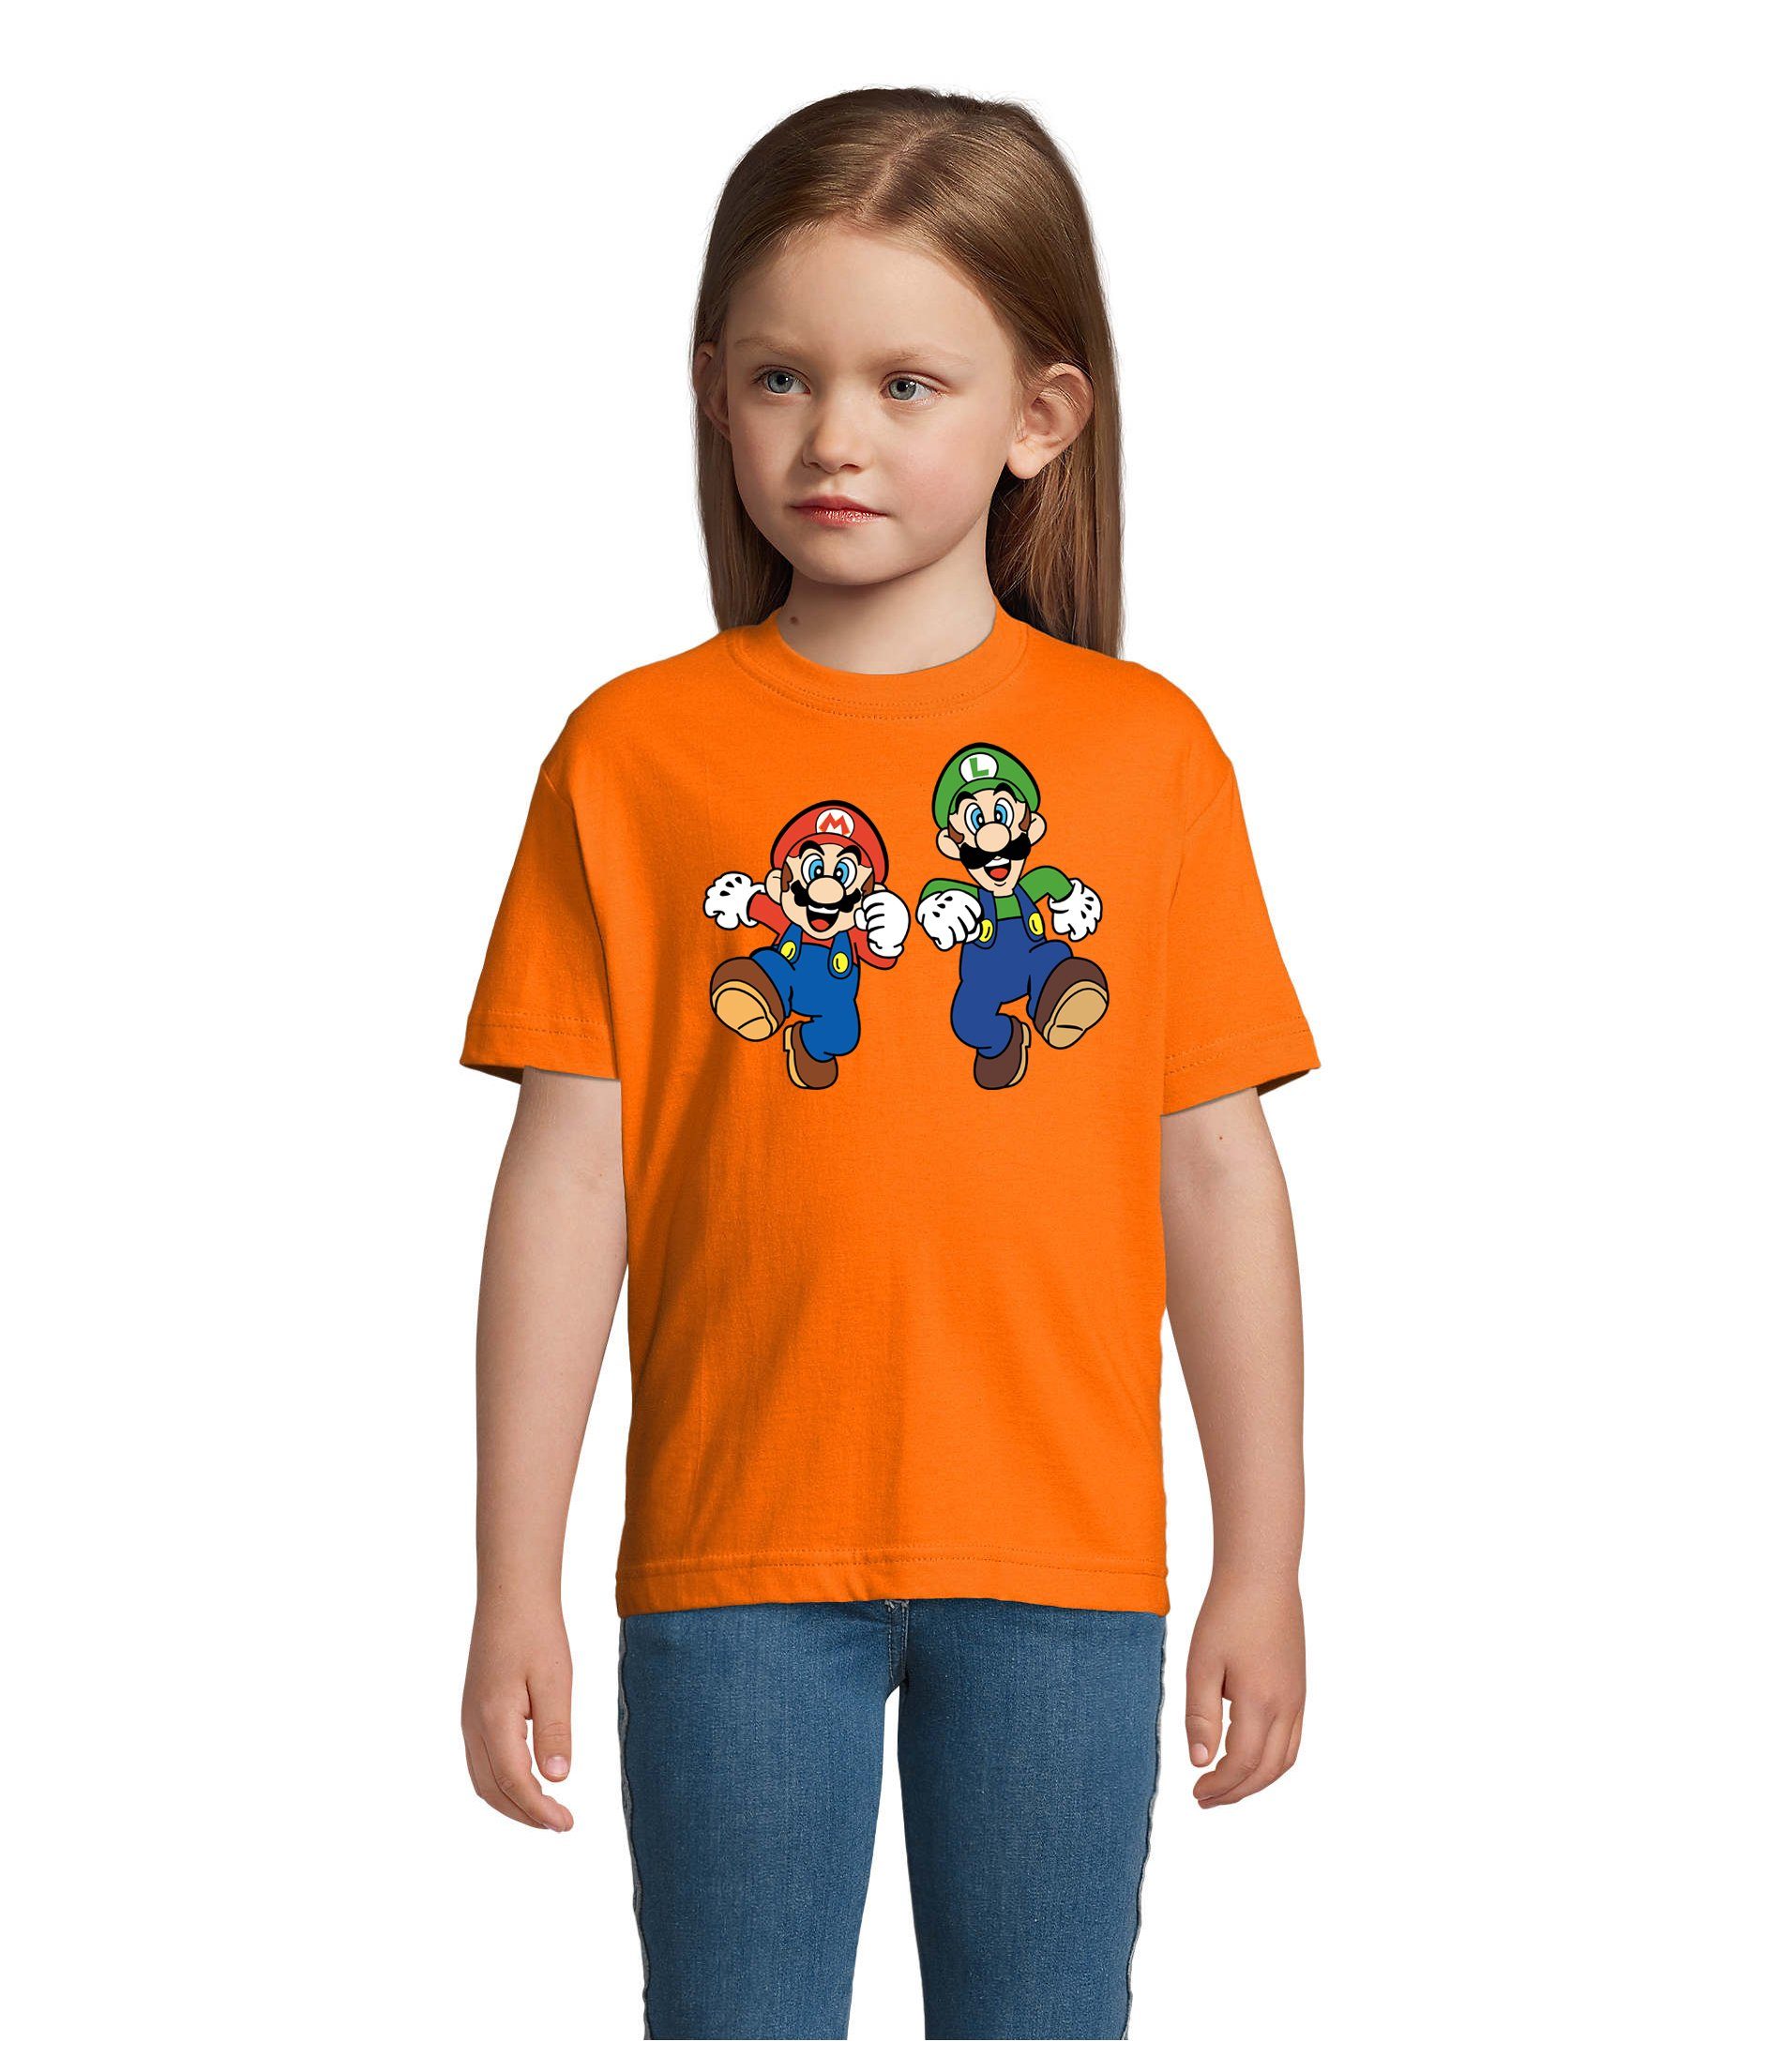 Blondie & Brownie Gamer T-Shirt Weiß Kinder Yoshi Bowser & Mario Luigi Nintendo Game Konsole